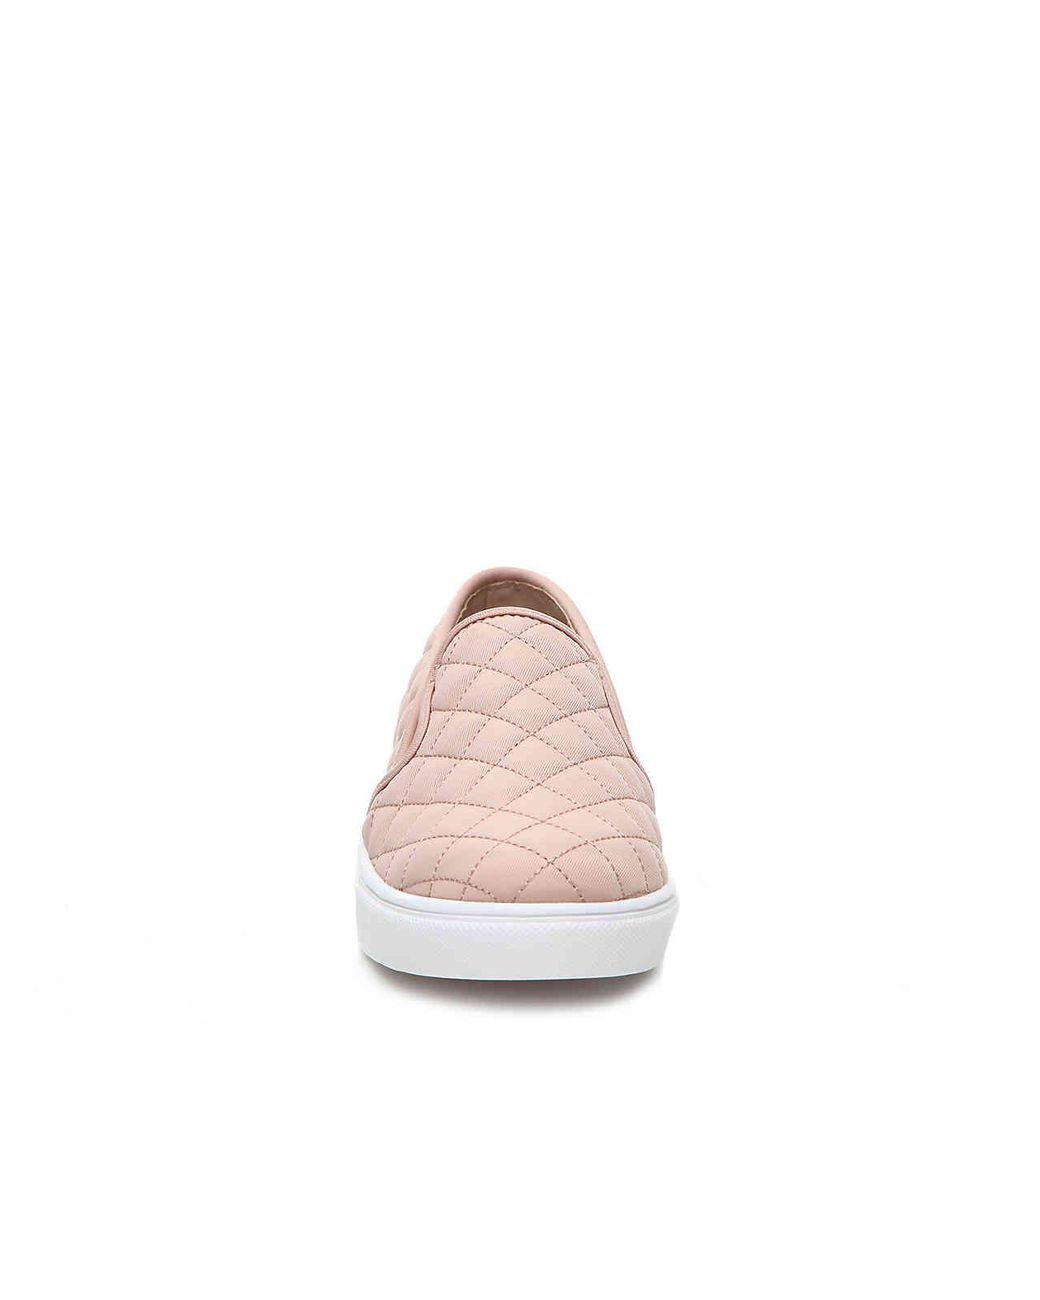 Steve Madden Leather Ecentrcq Slip-on Sneaker in Blush (Pink) | Lyst